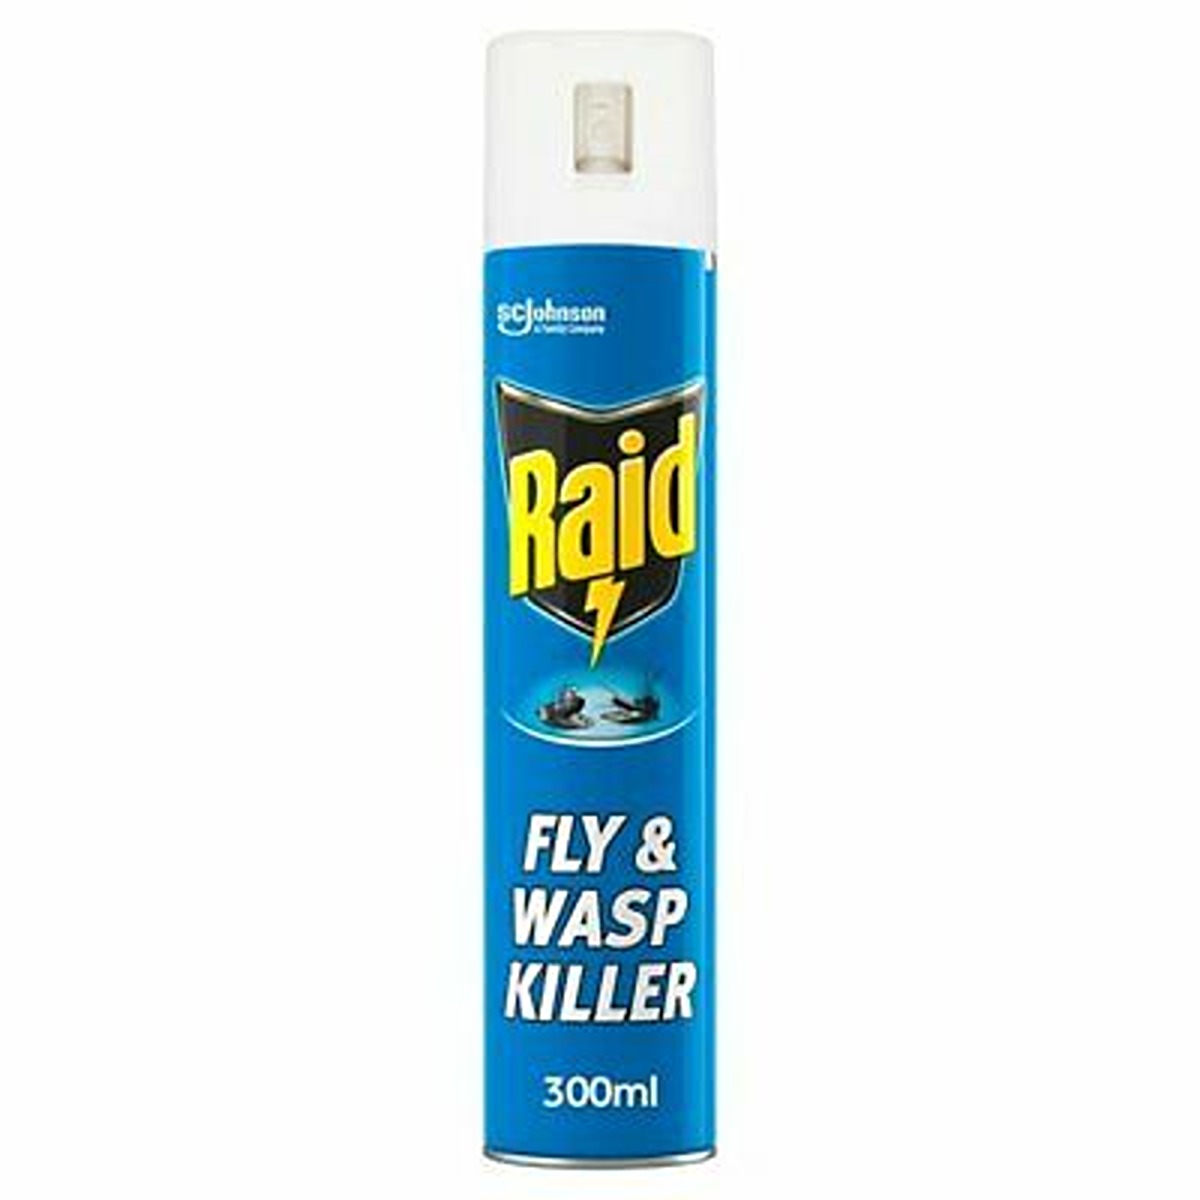 A blue and white Raid - Fly & Wasp Killer - 300ml aerosol can.